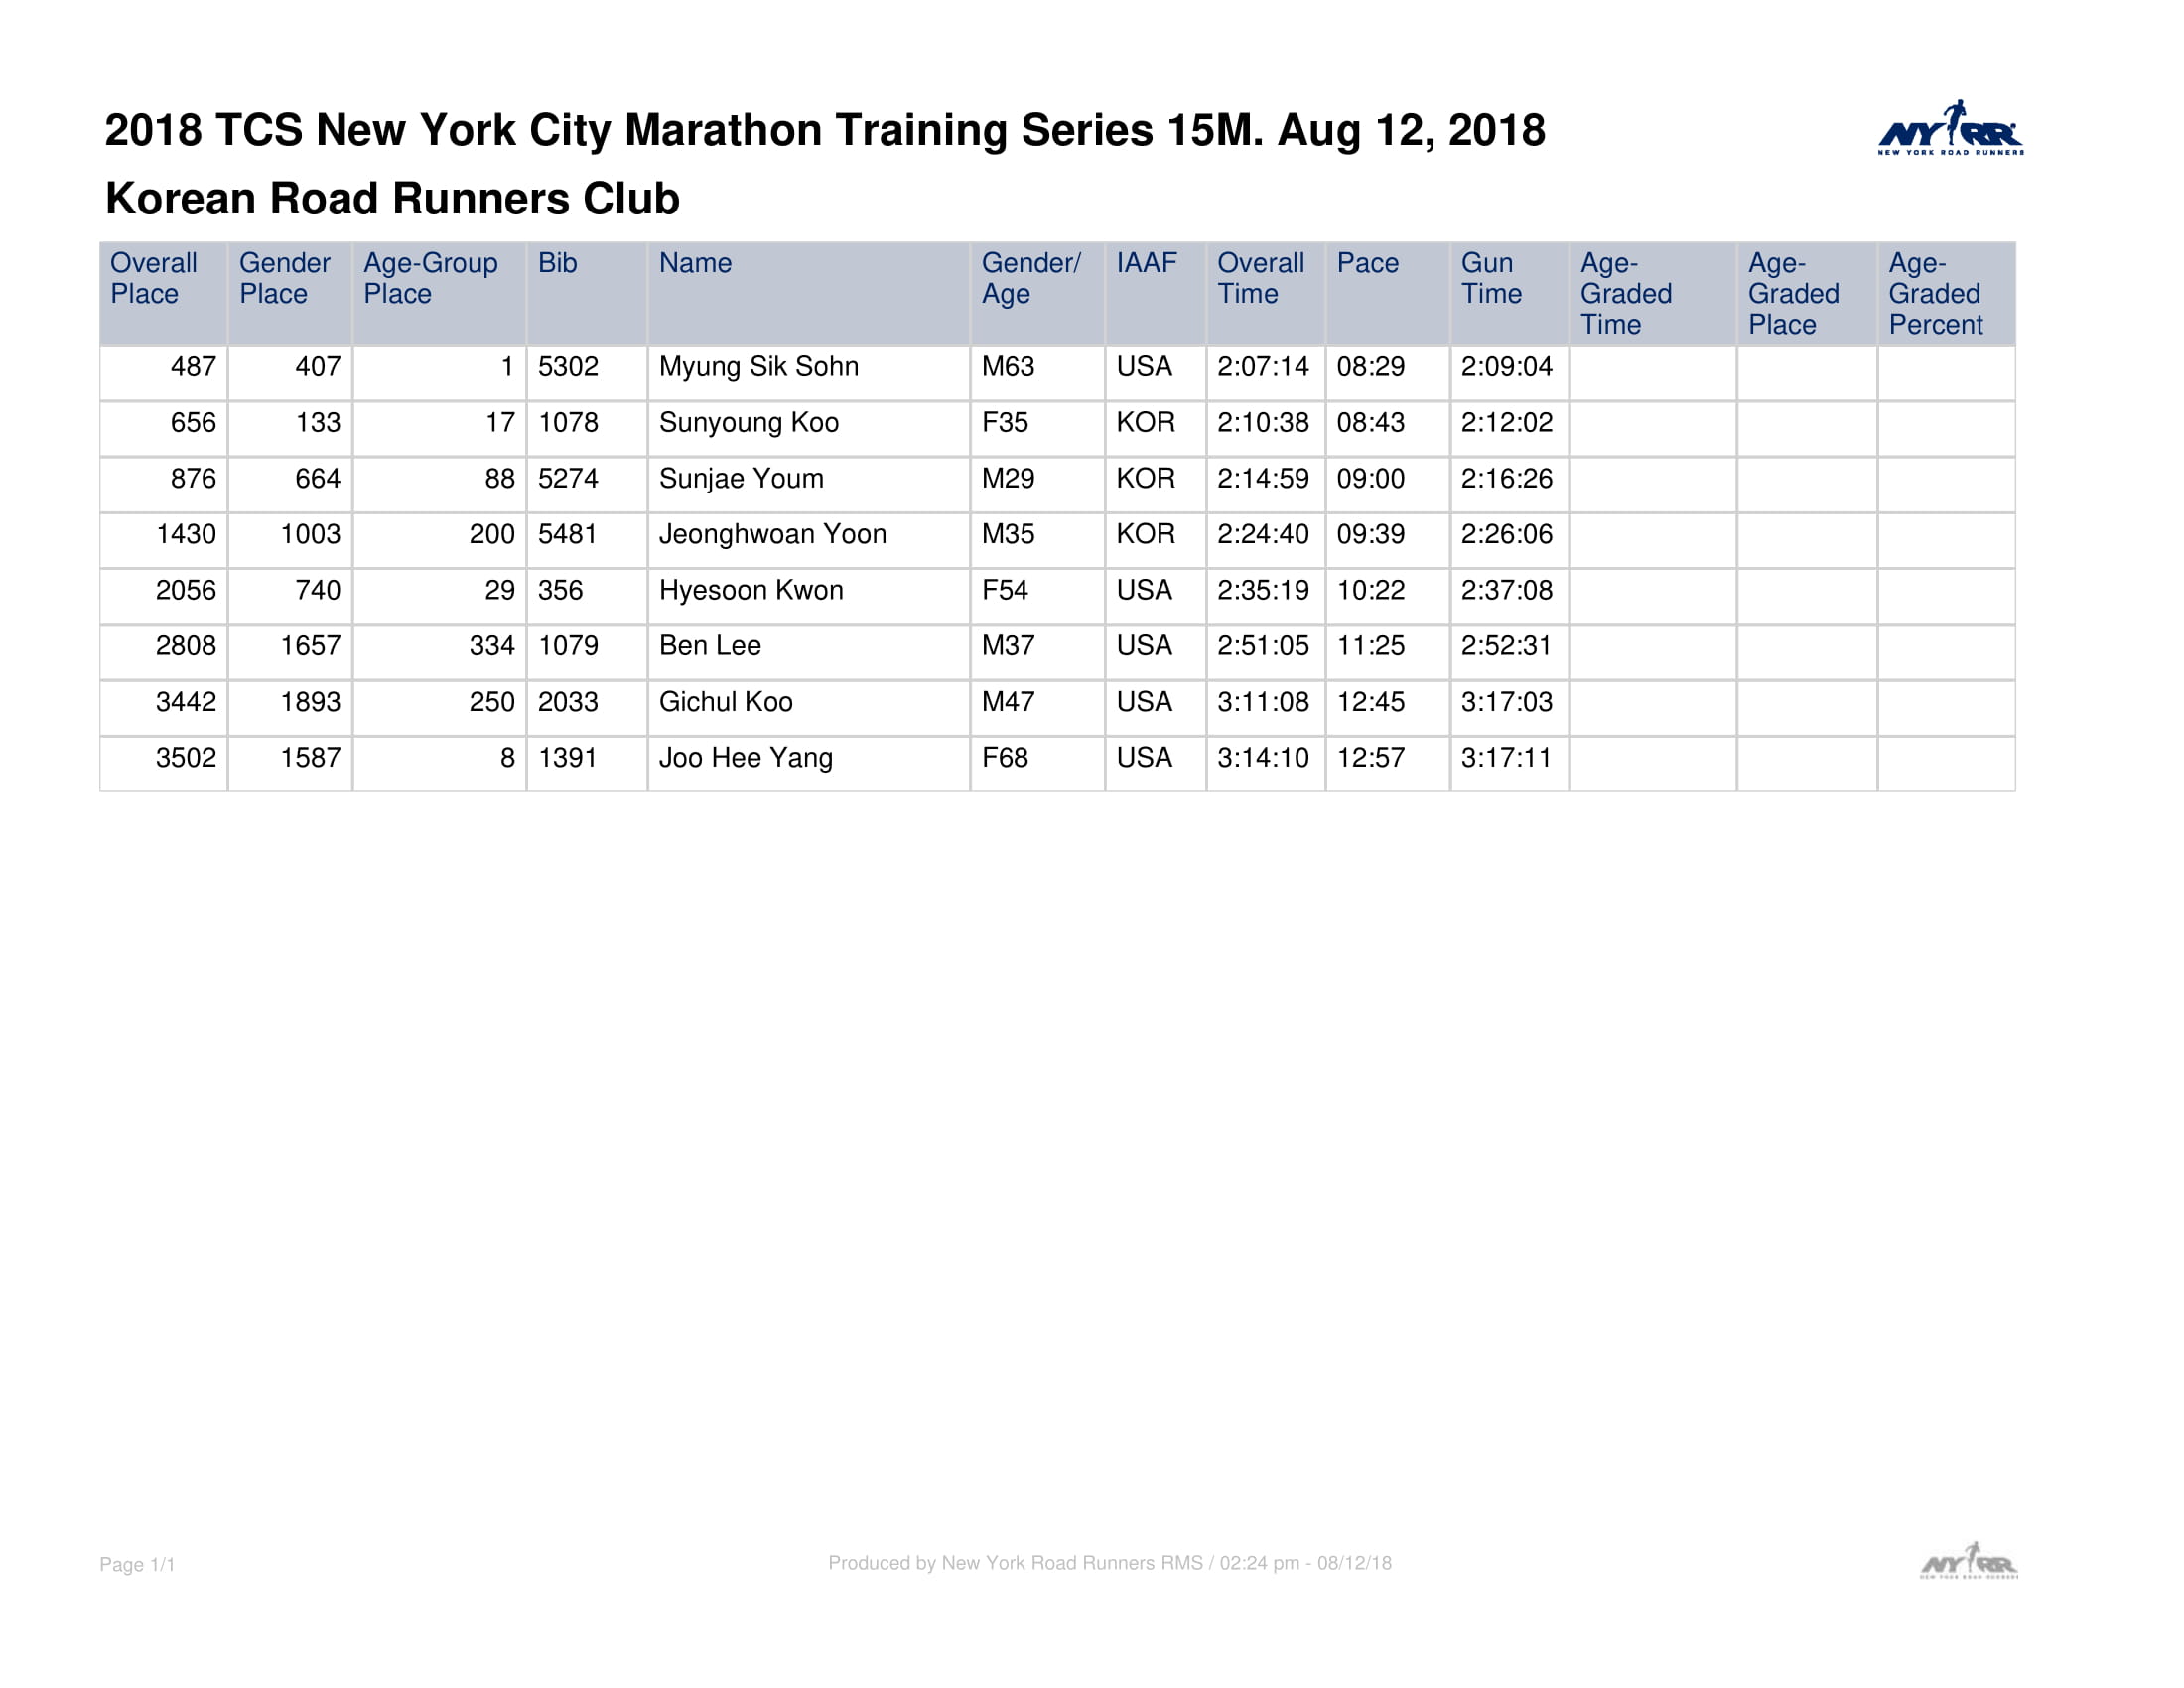 081218 - TCS New York City Marathon Training Series 15M.jpg